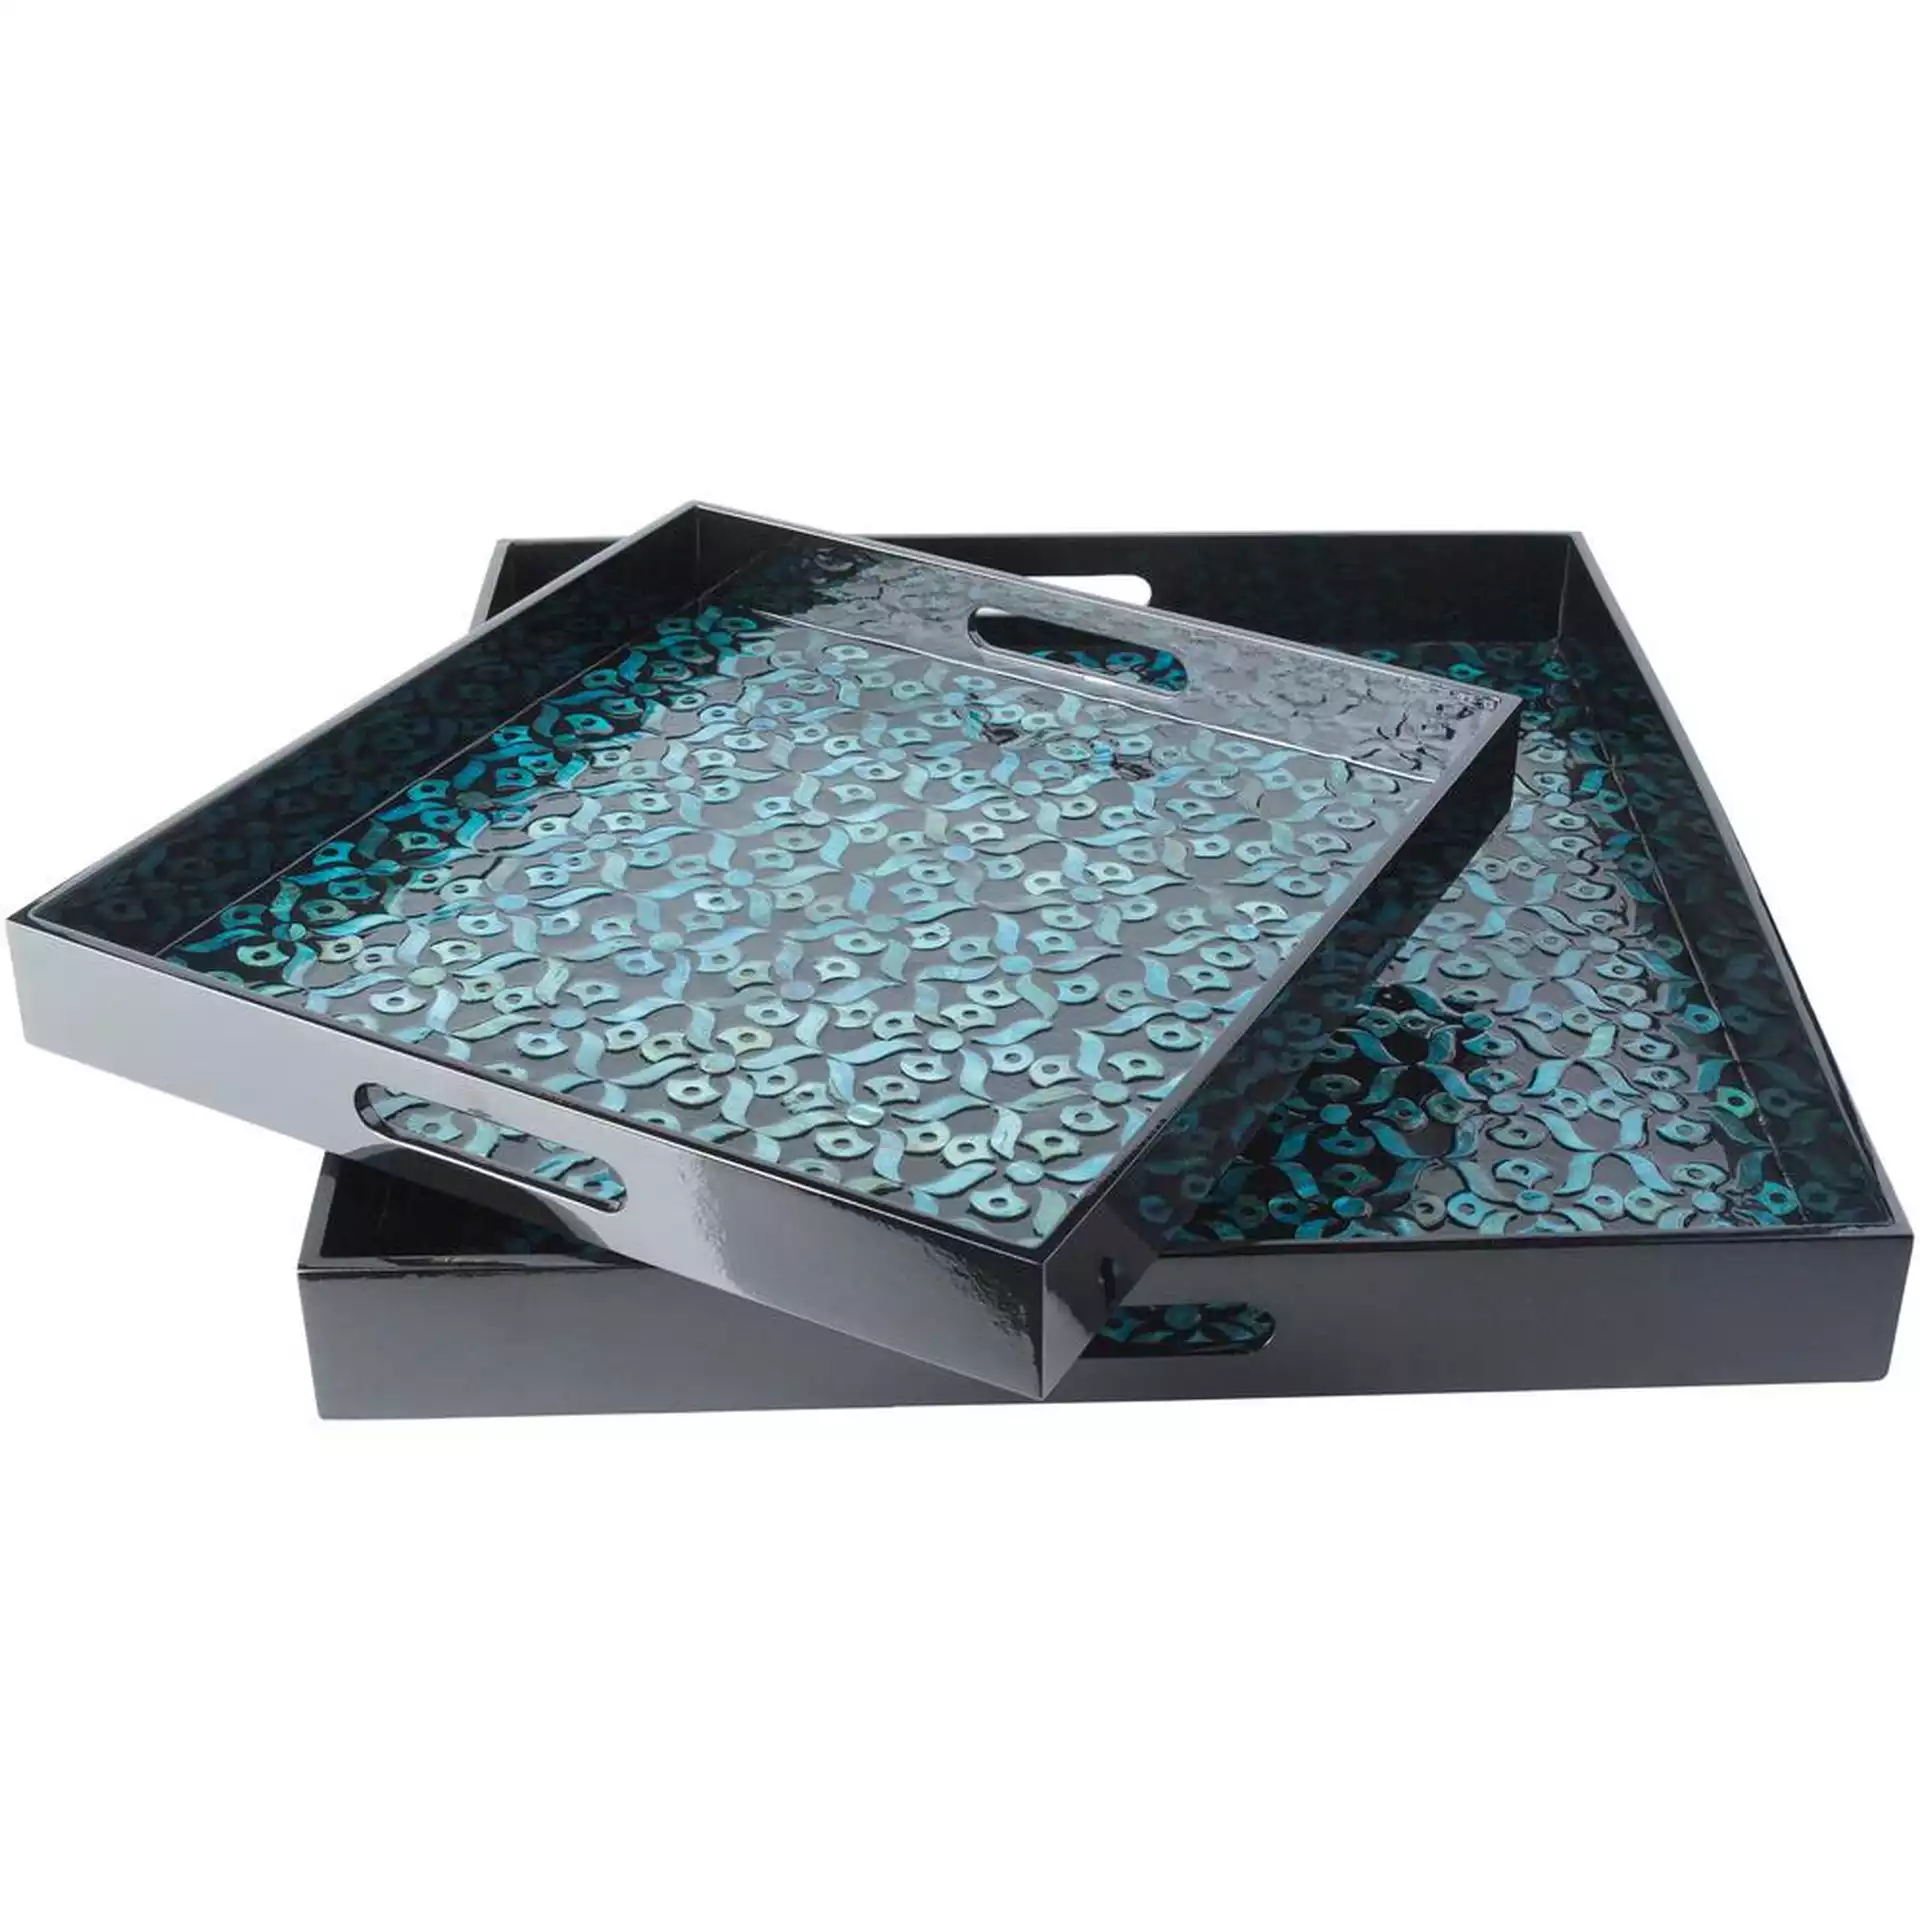 Utone Teal 2-Piece Decorative Tray Set, Turquoises/Aquas